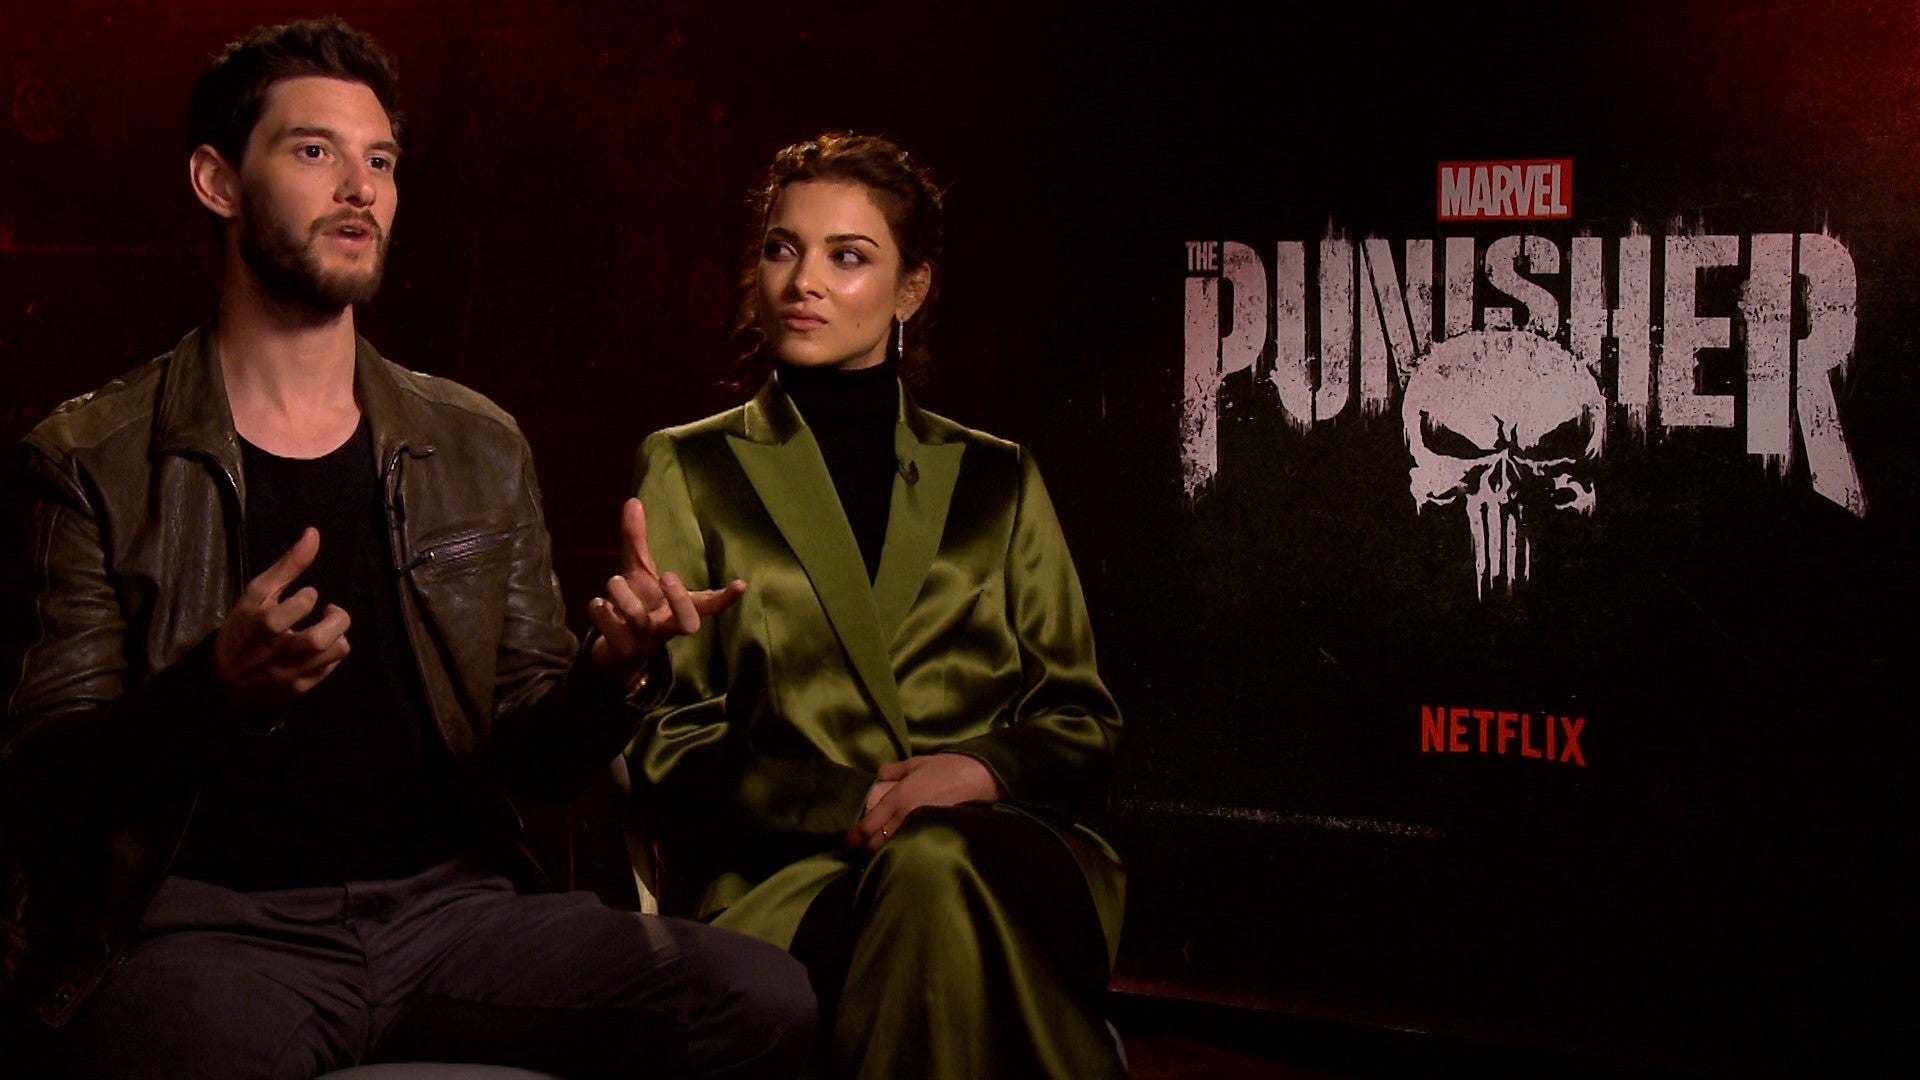 Will Netflix Release Third Season Of The Punishers?